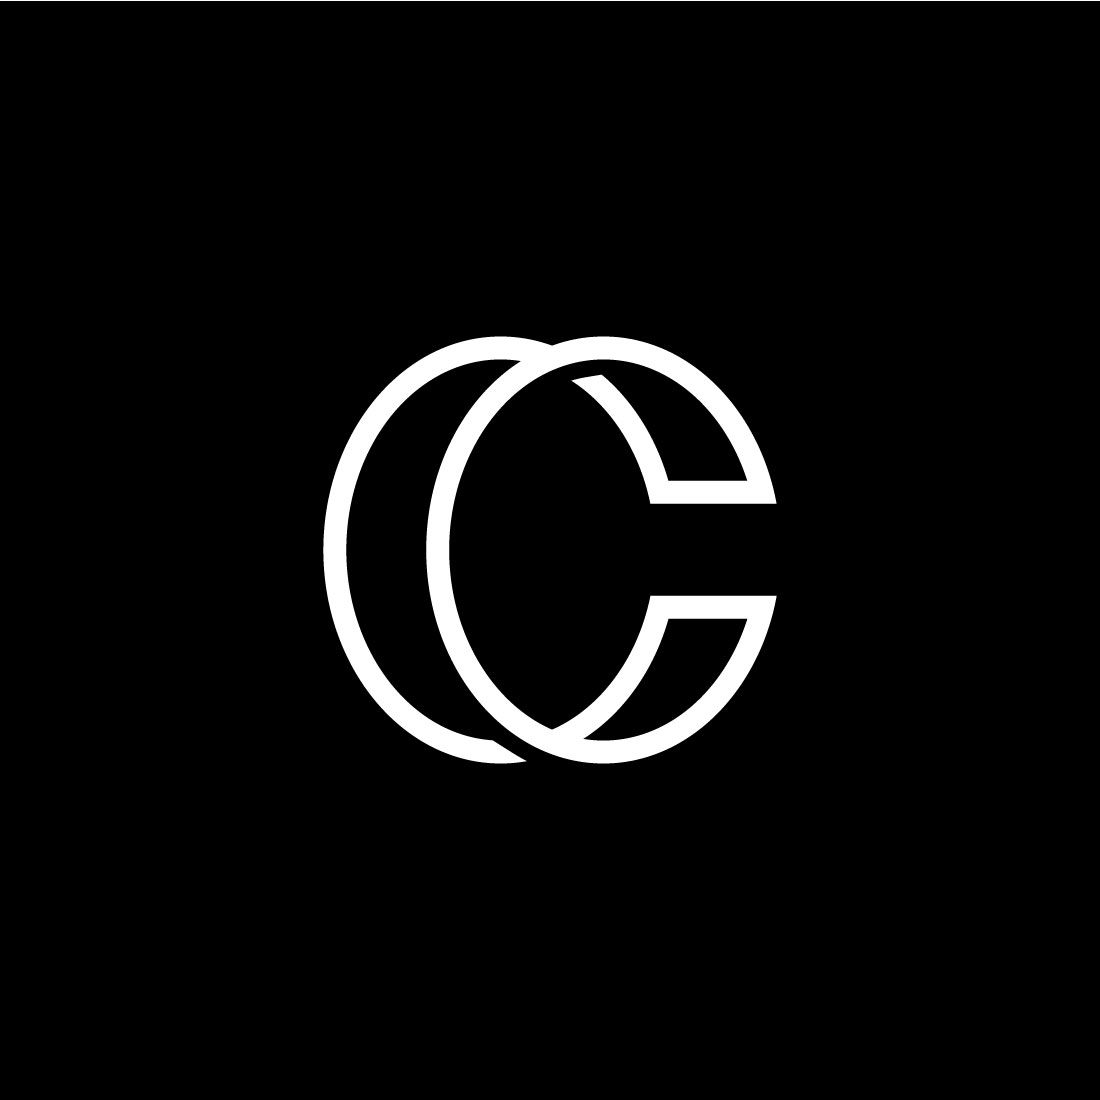 Gold alphabet letter gc g c logo combination icon Vector Image